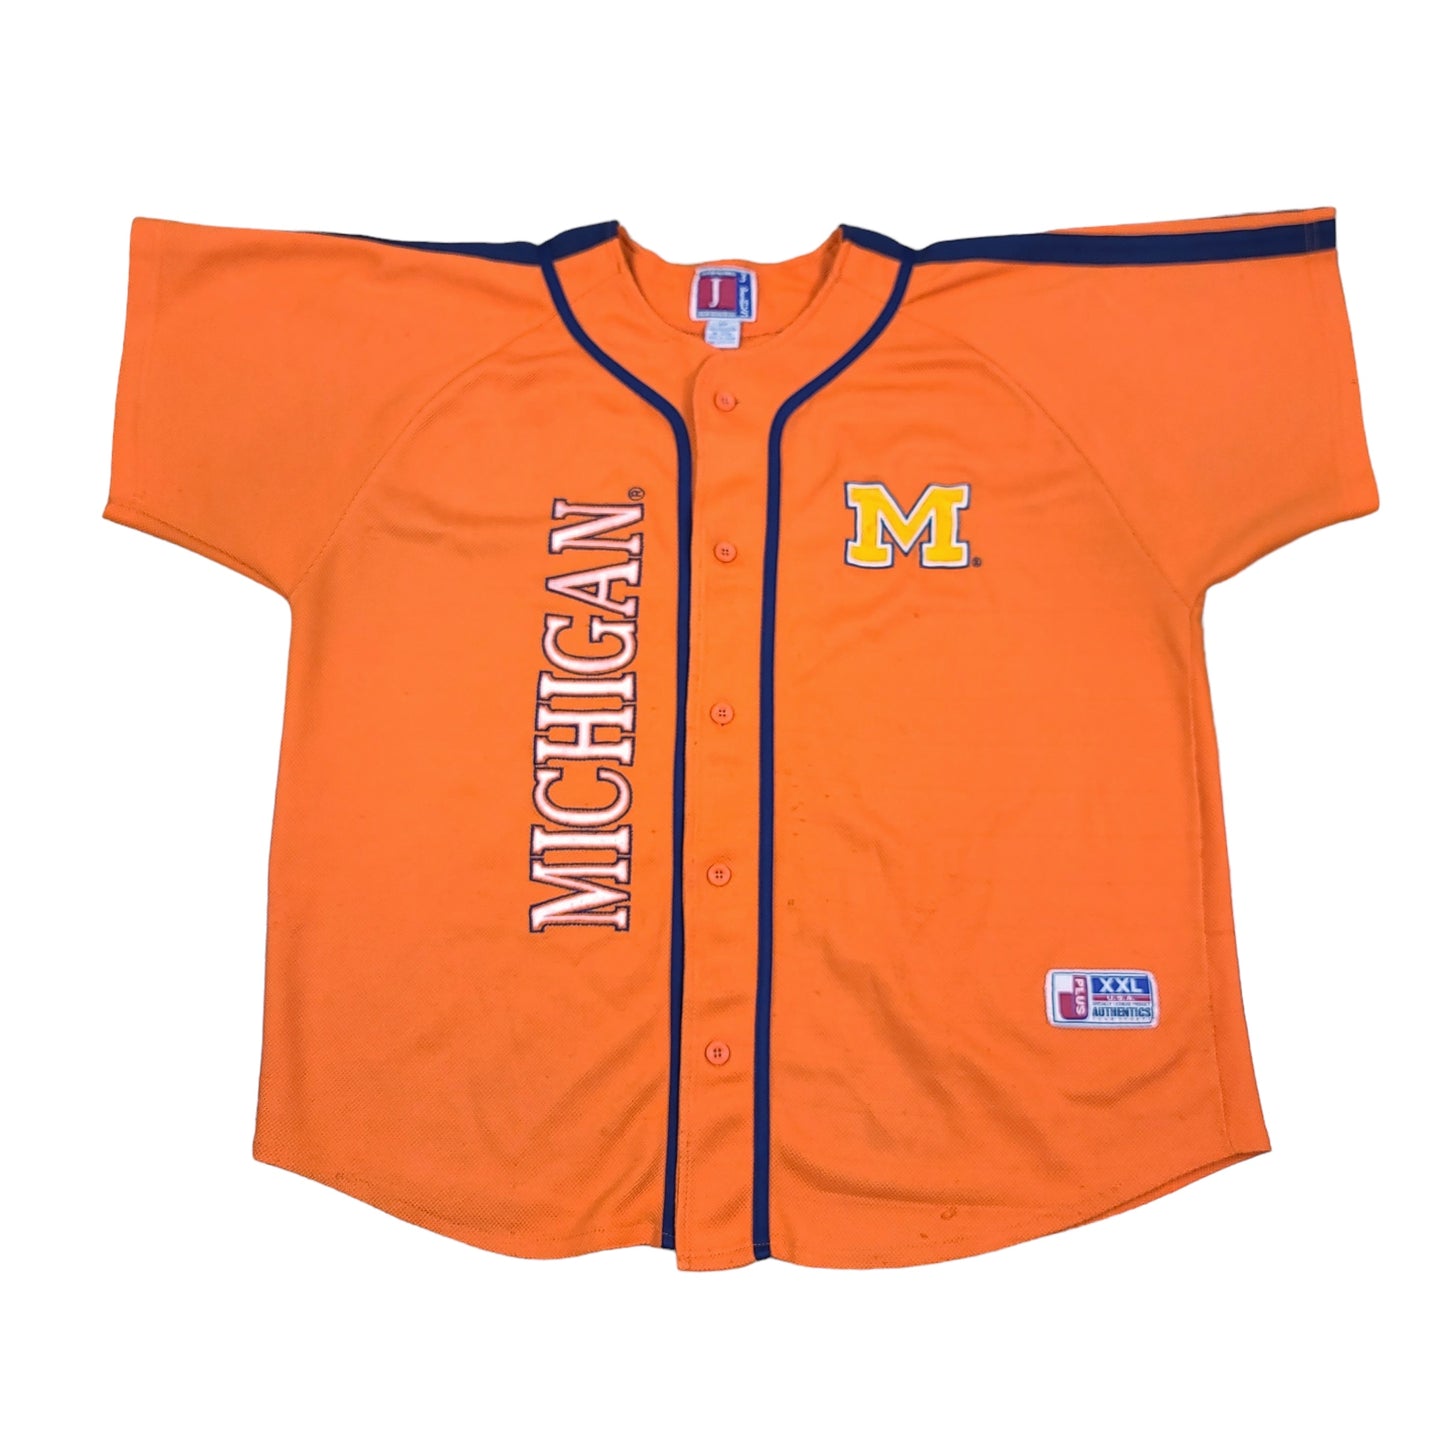 Vintage University of Michigan Orange Baseball Jersey